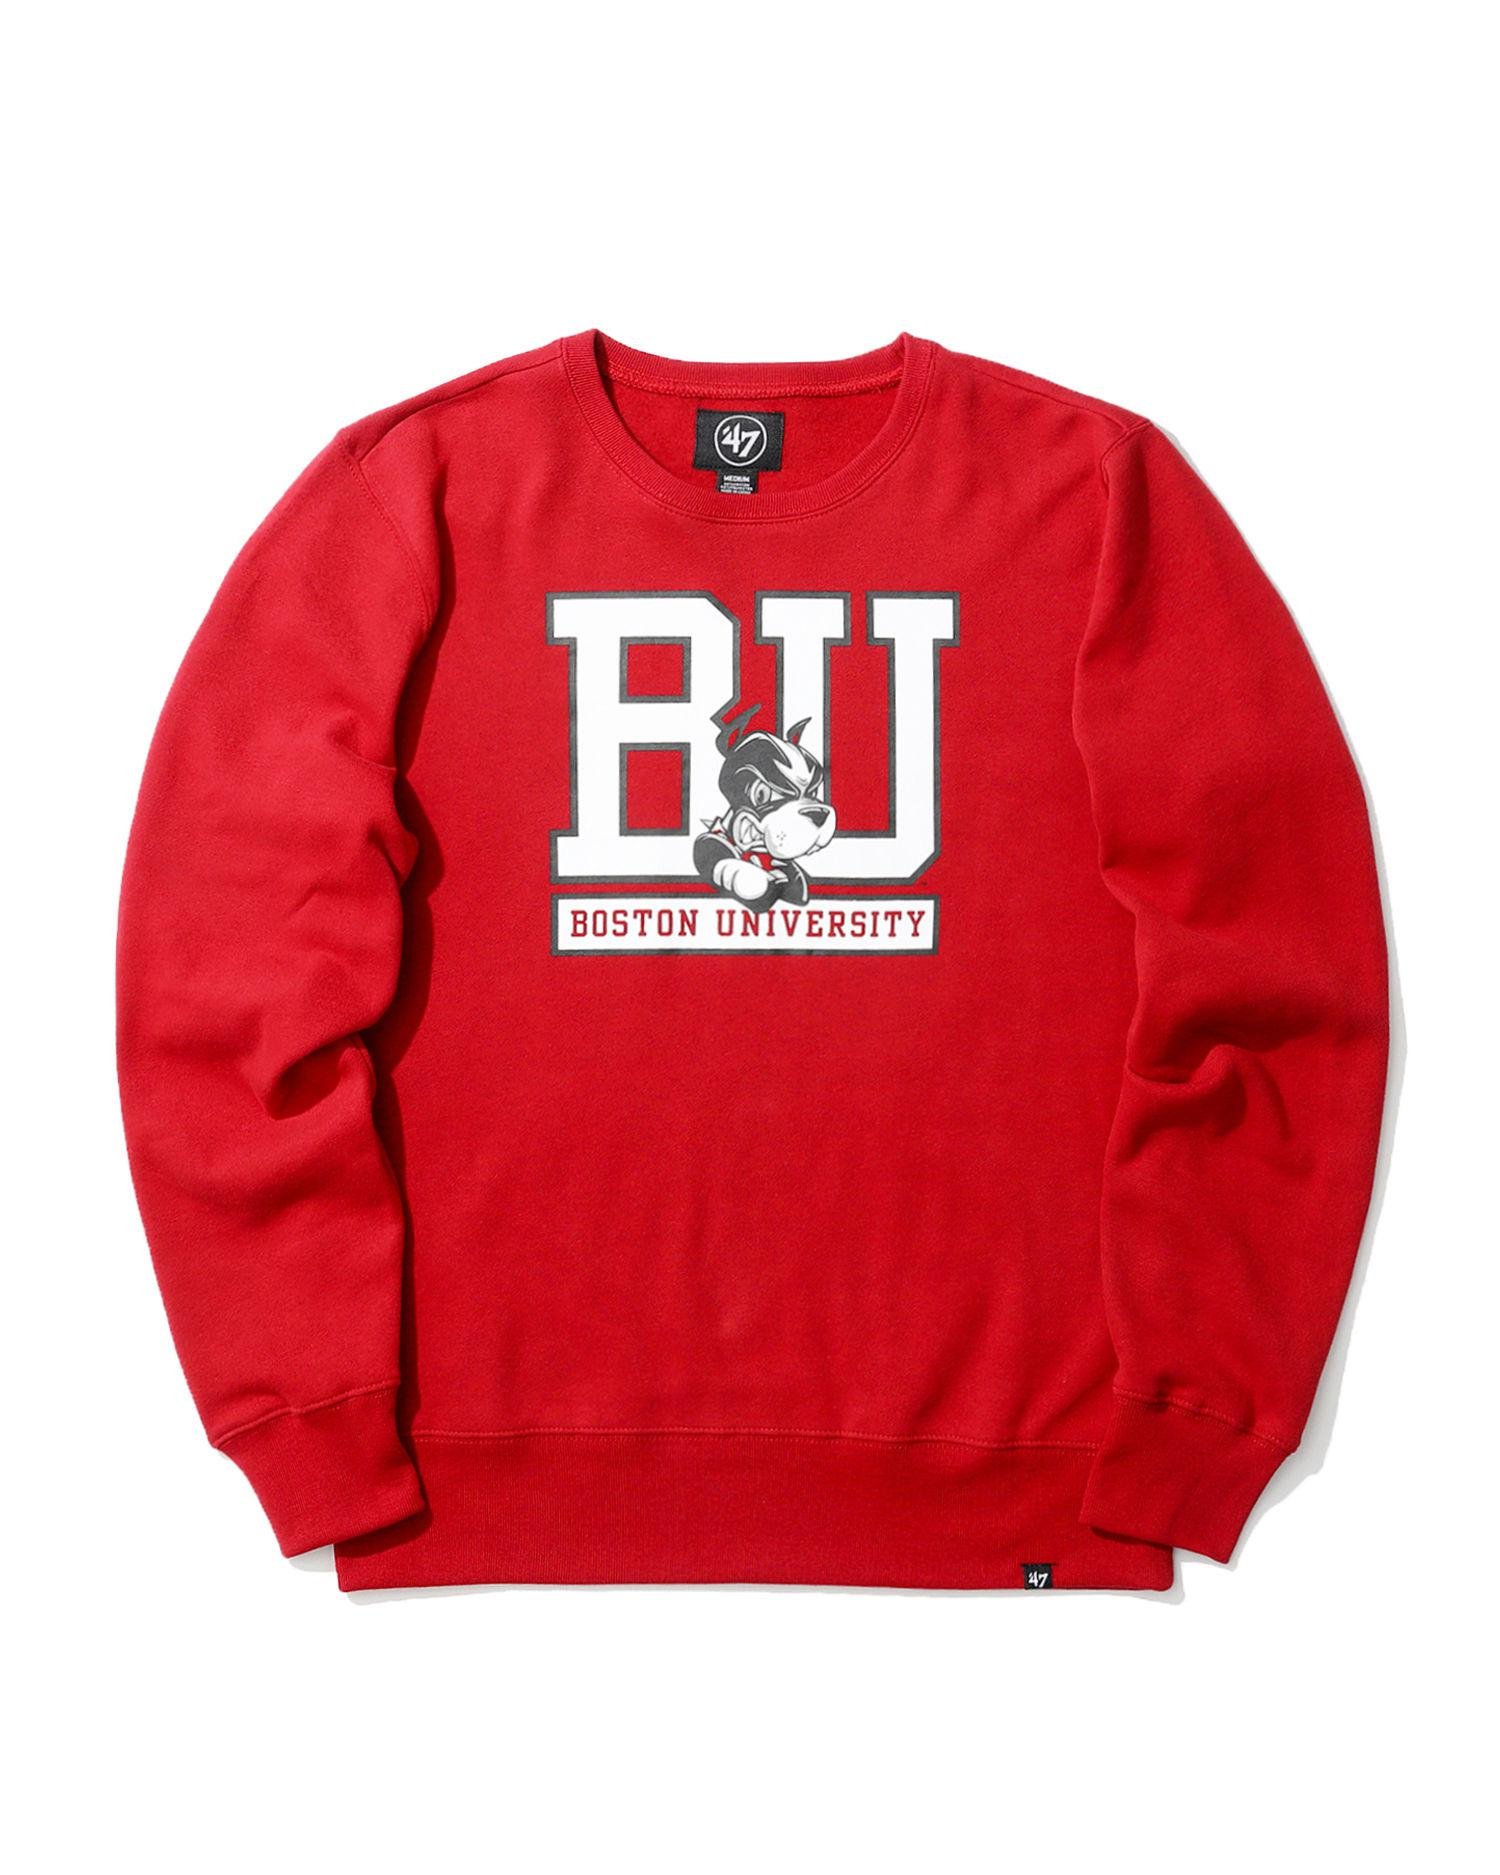 Boston University Terriers sweatshirt by '47